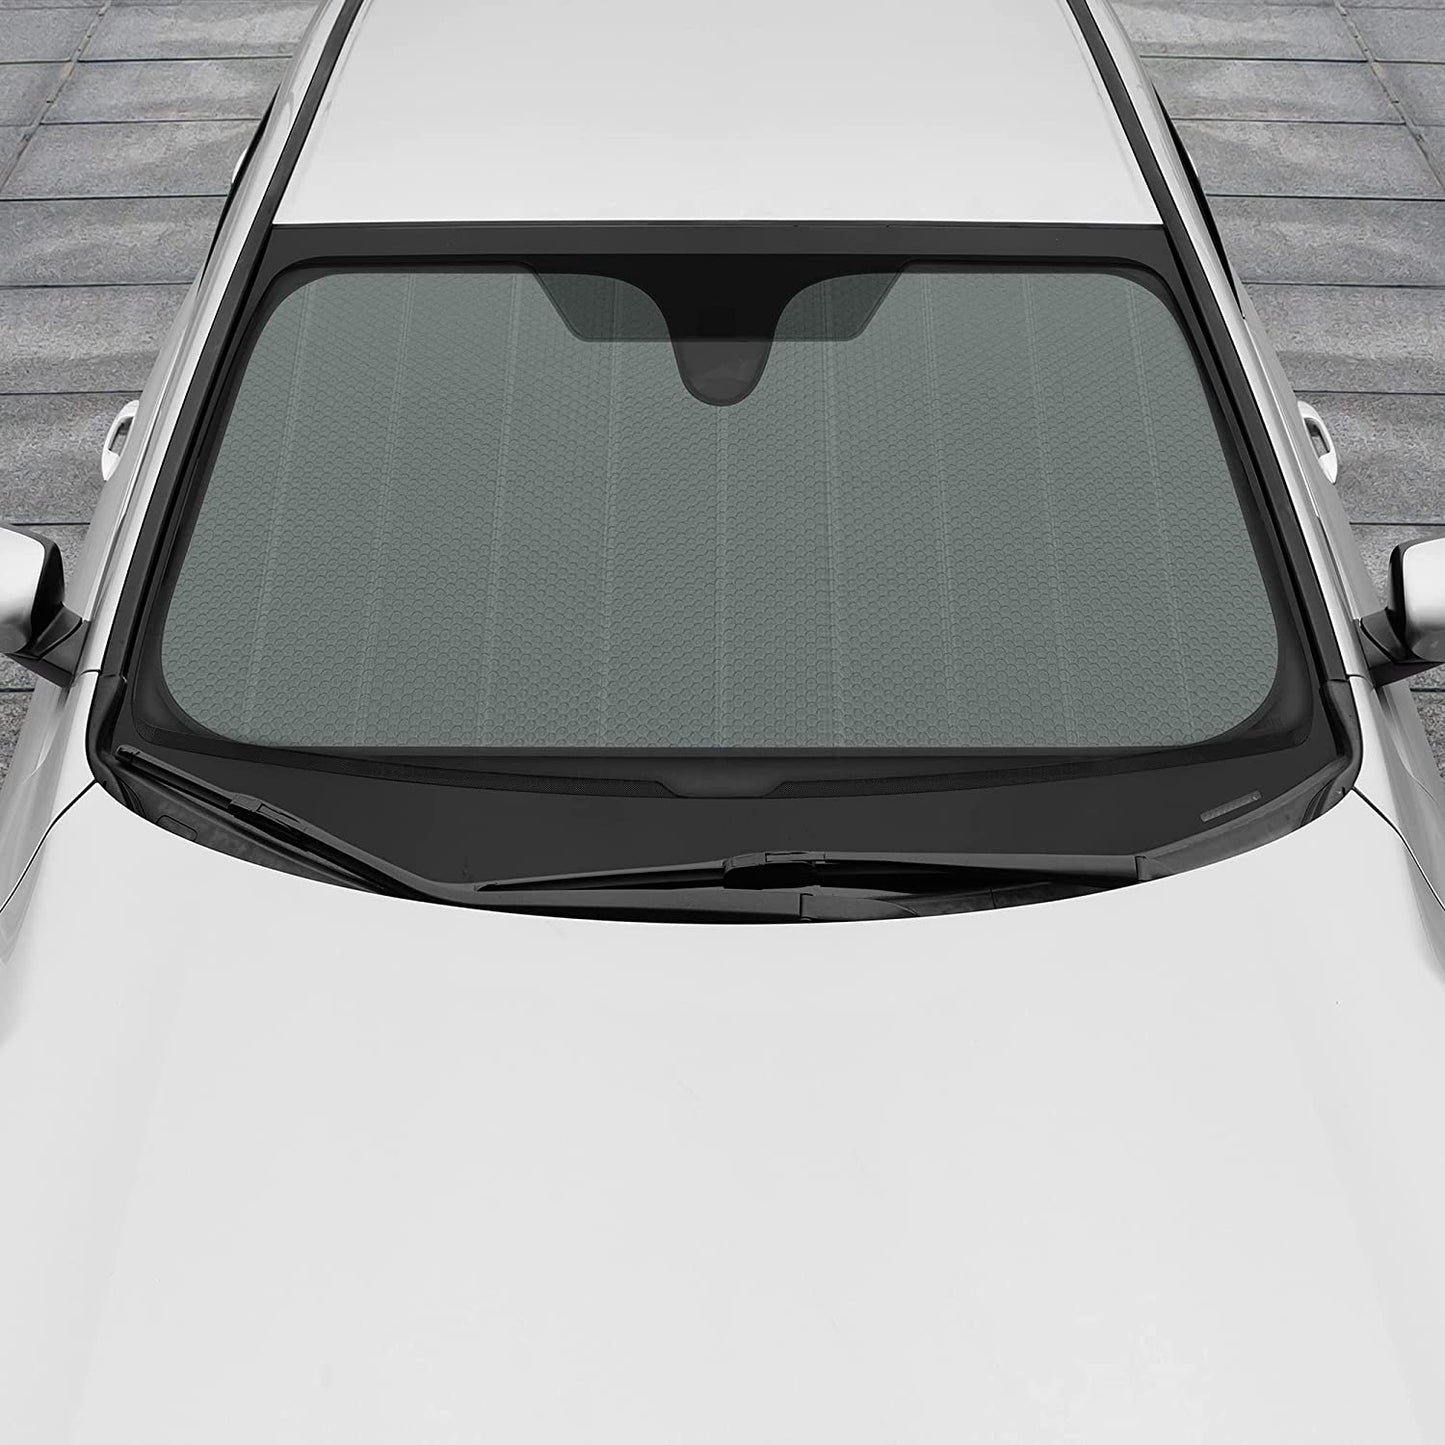 Front Windshield Sun Shade - Jumbo Accordion Folding Auto Sunshade for Car Truck SUV - Blocks UV Rays Sun Visor Protector - Keeps Your Vehicle Cool - 66 x 27 Inch